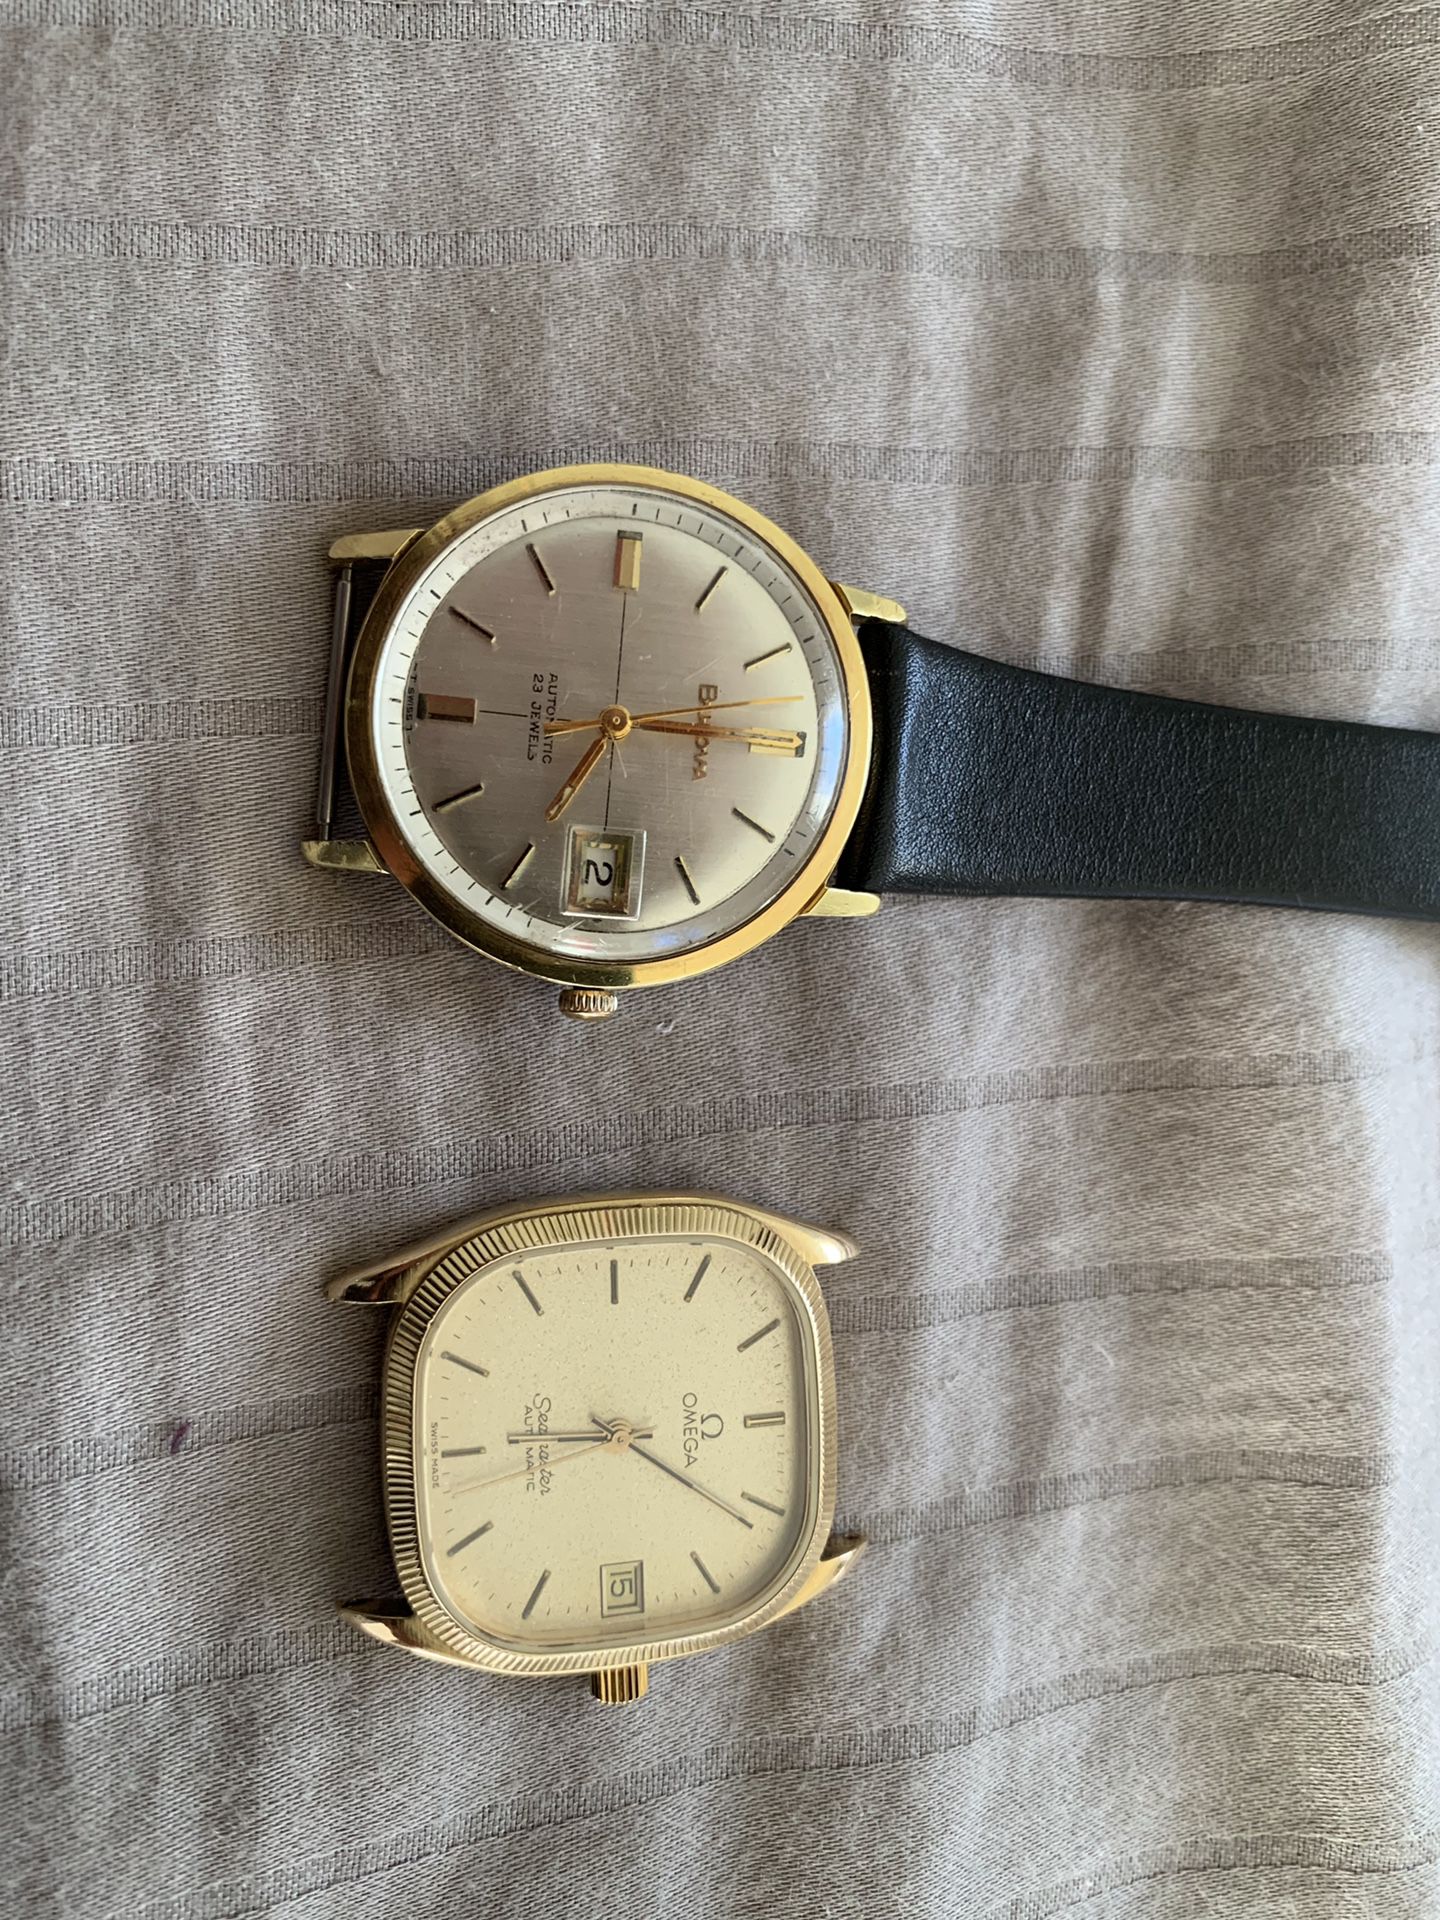 Omega and Bulova watches